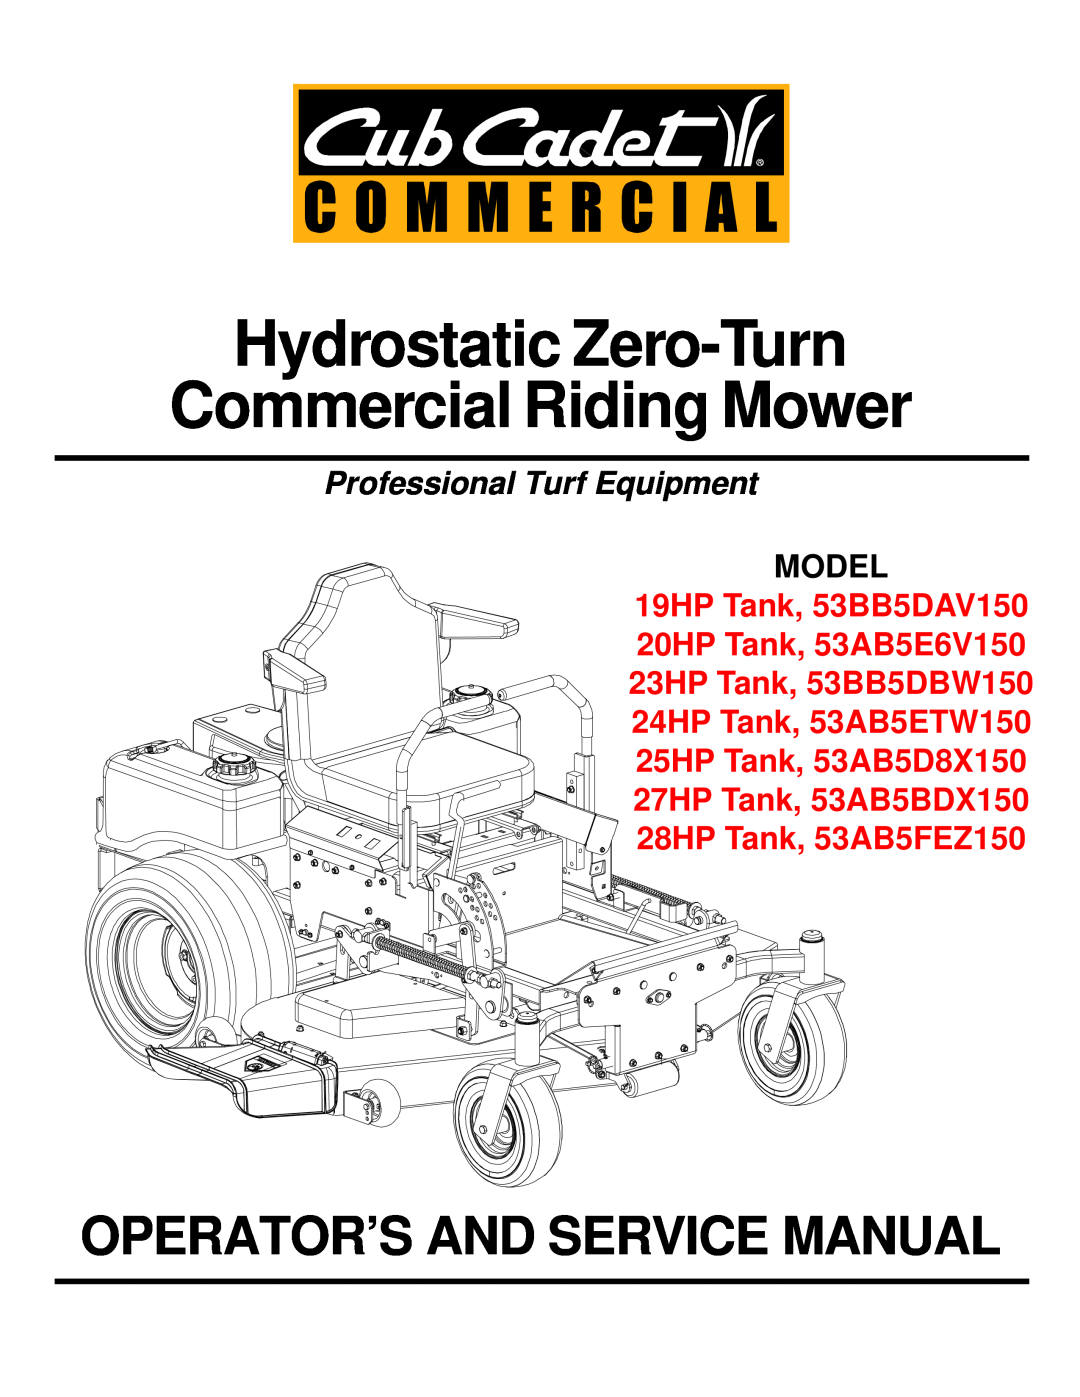 Cub Cadet service manual Model, Hydrostatic Zero-Turn Commercial Riding Mower, Professional Turf Equipment 